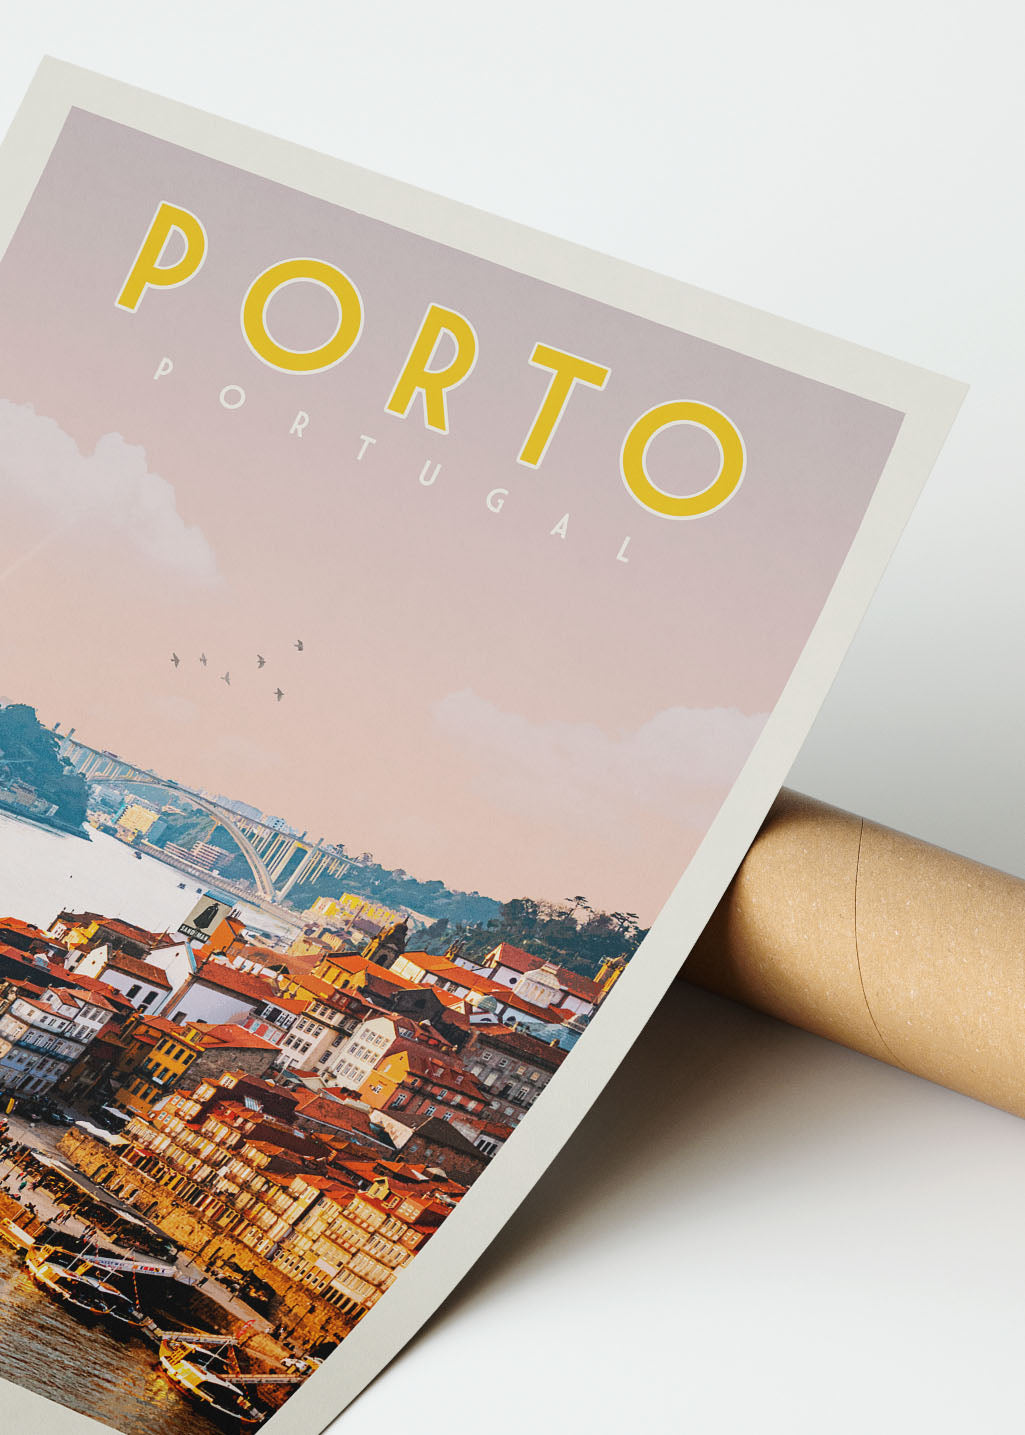 Porto, Portugal - Vintage Travel Poster